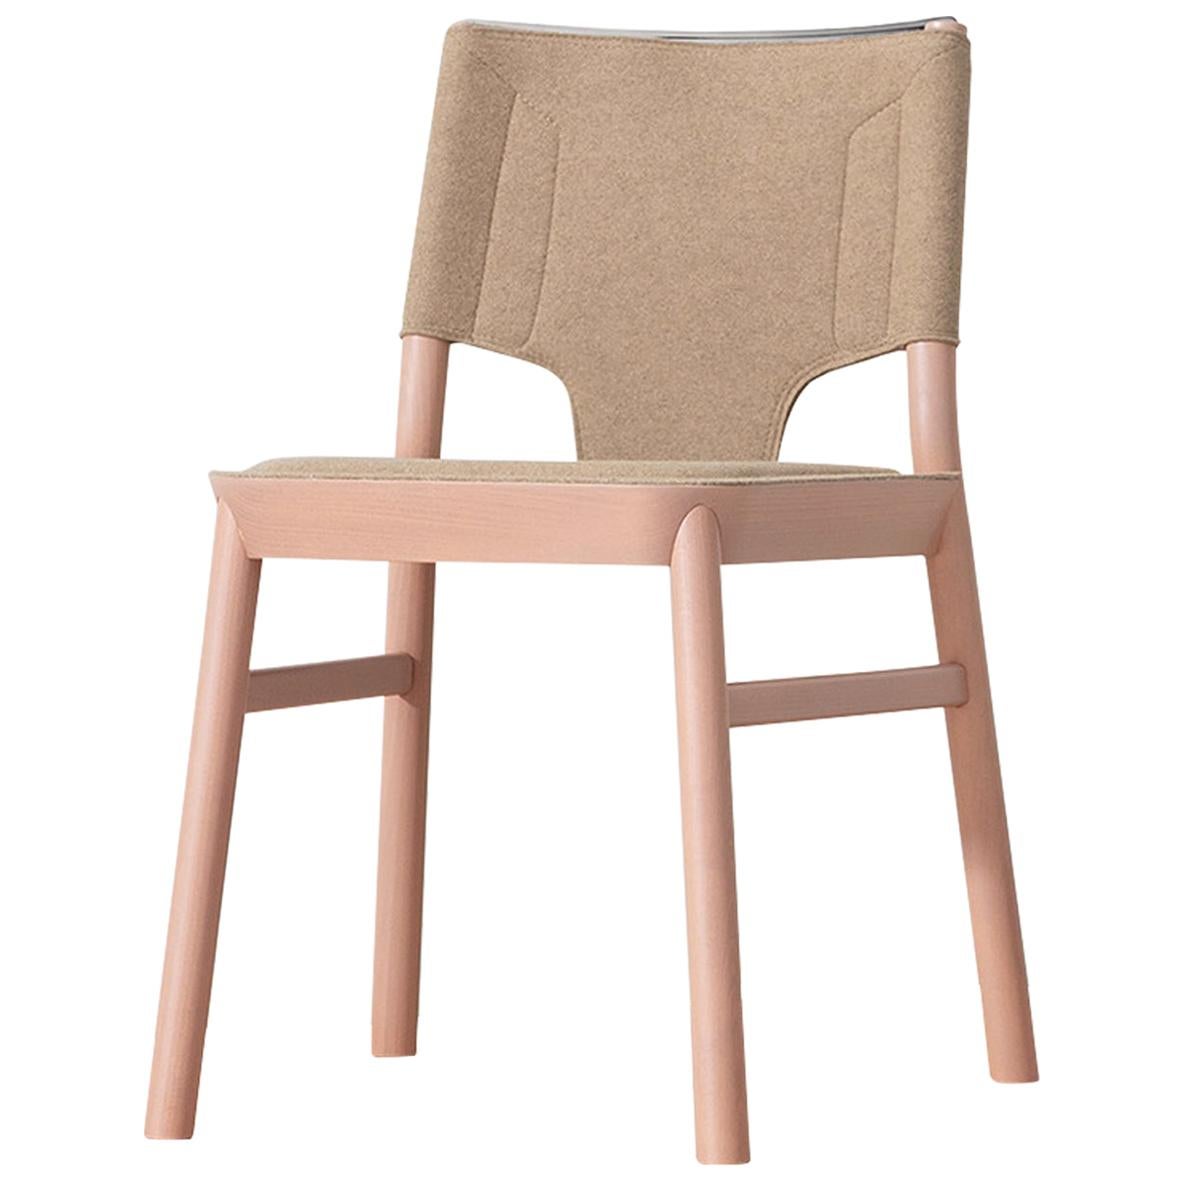 Marimba 110 Brown Chair by Emilio Nanni